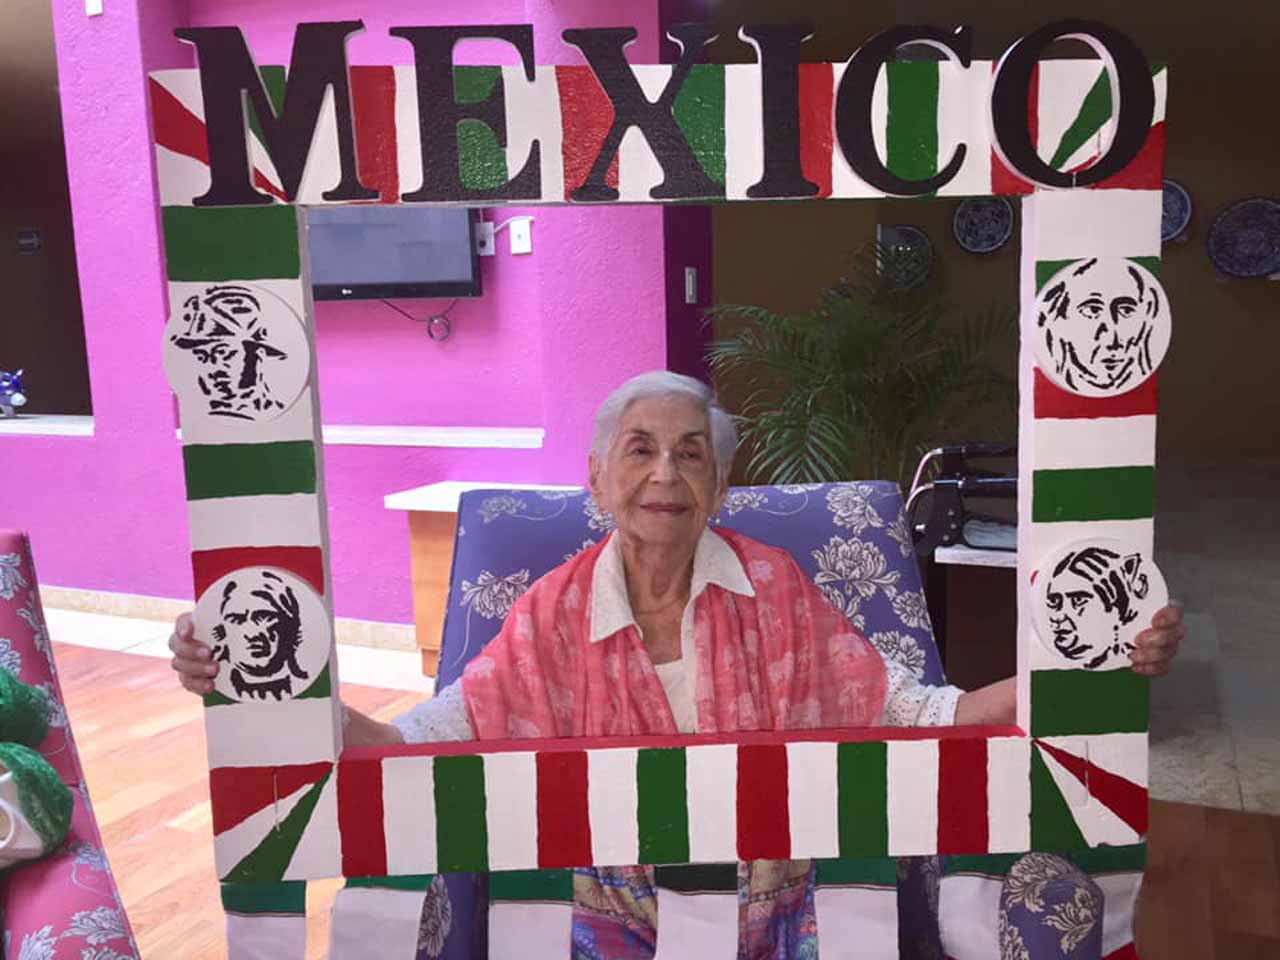 Viva México 2020